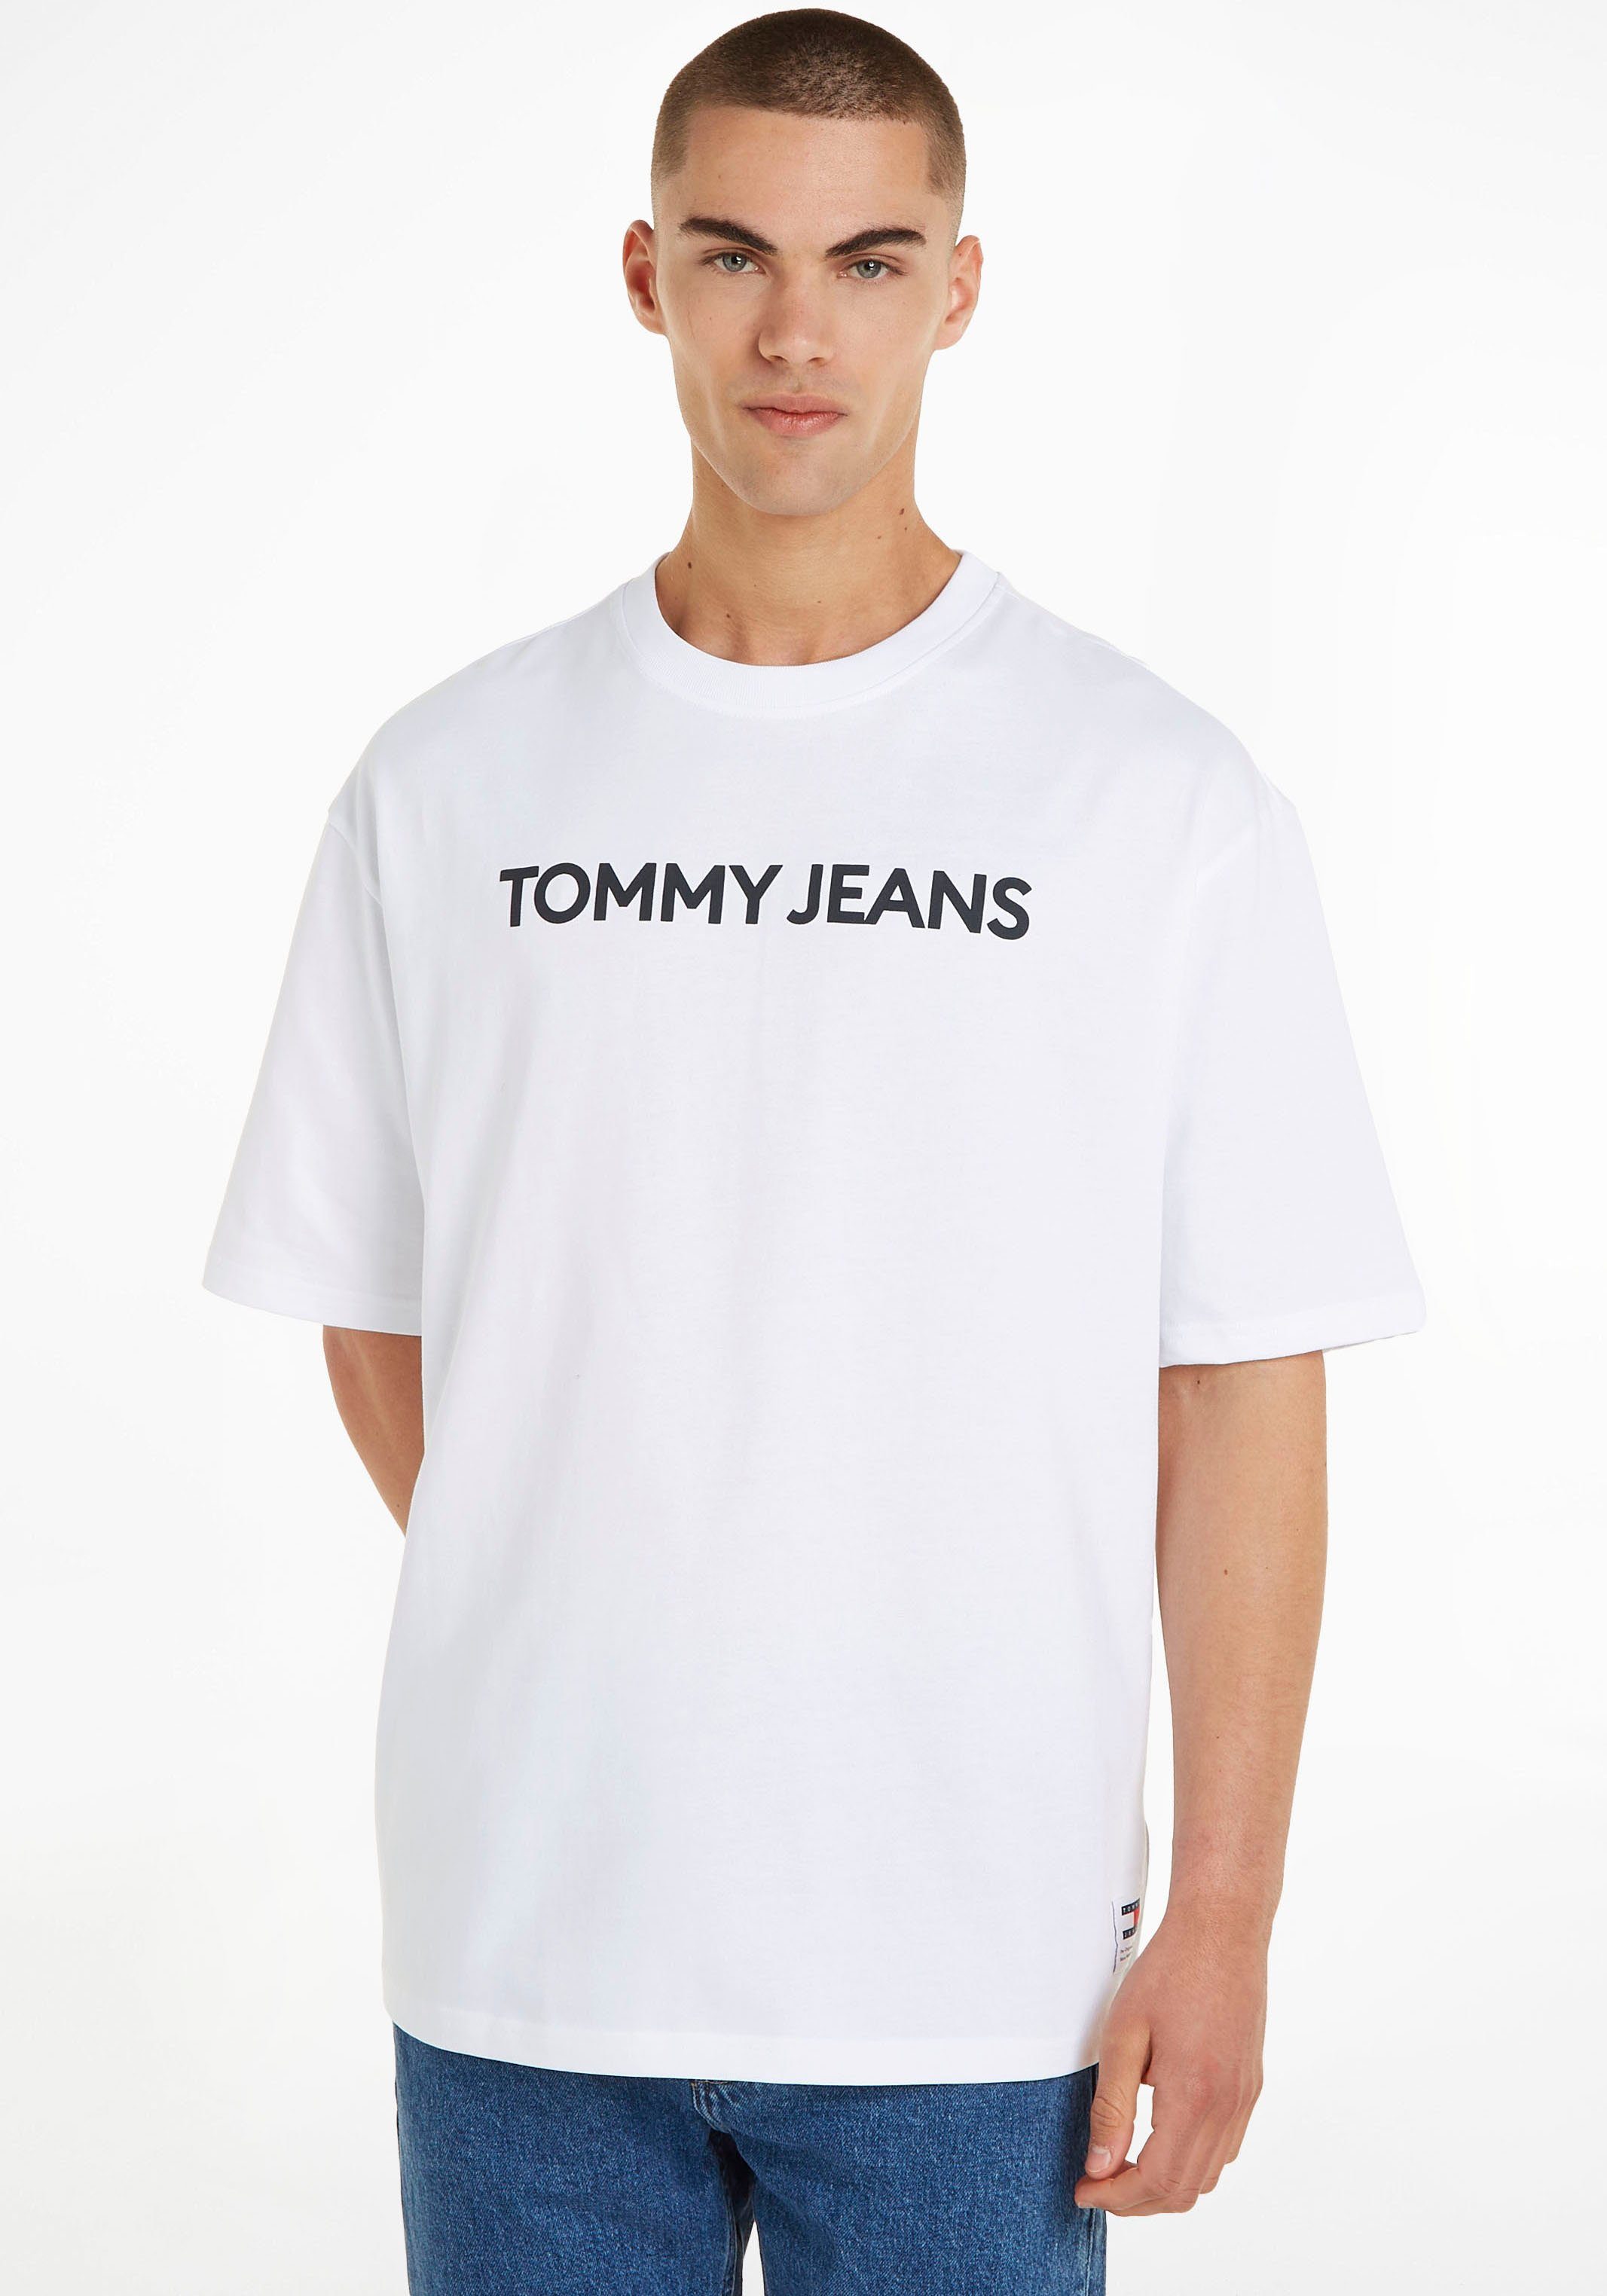 TEE OVZ mit TJM Rundhalsausschnitt White Tommy BOLD Jeans EXT T-Shirt CLASSICS